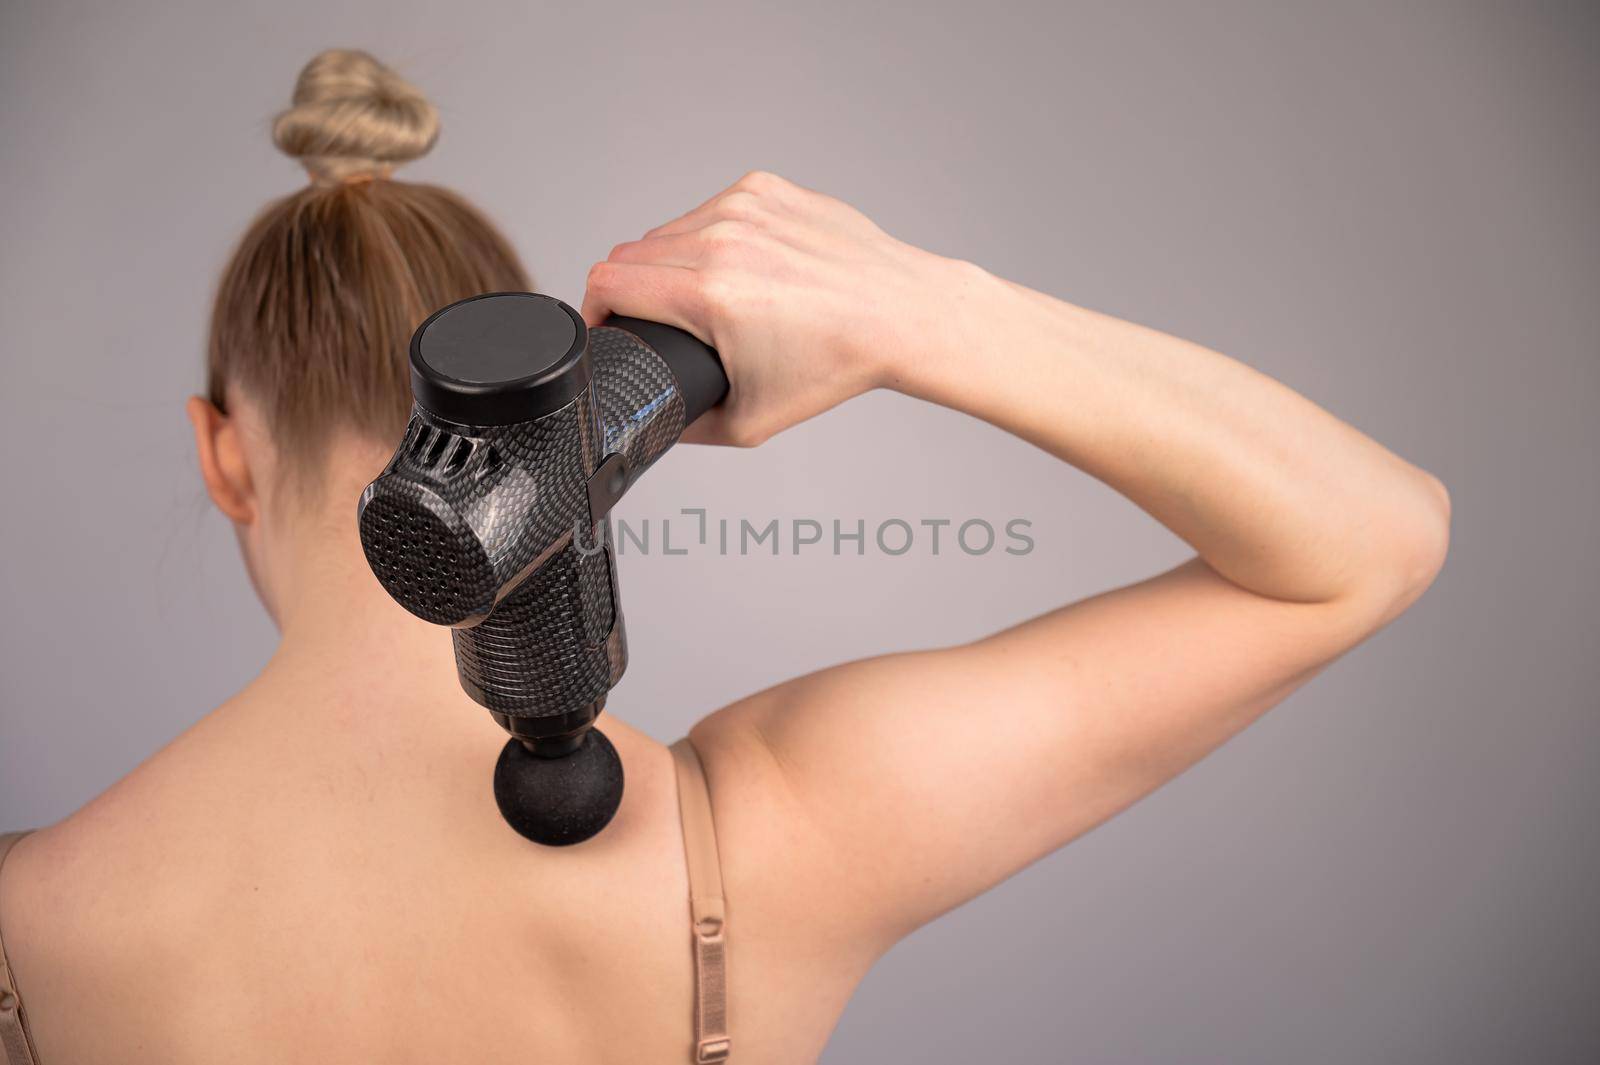 Caucasian woman giving herself a back massage with a gun